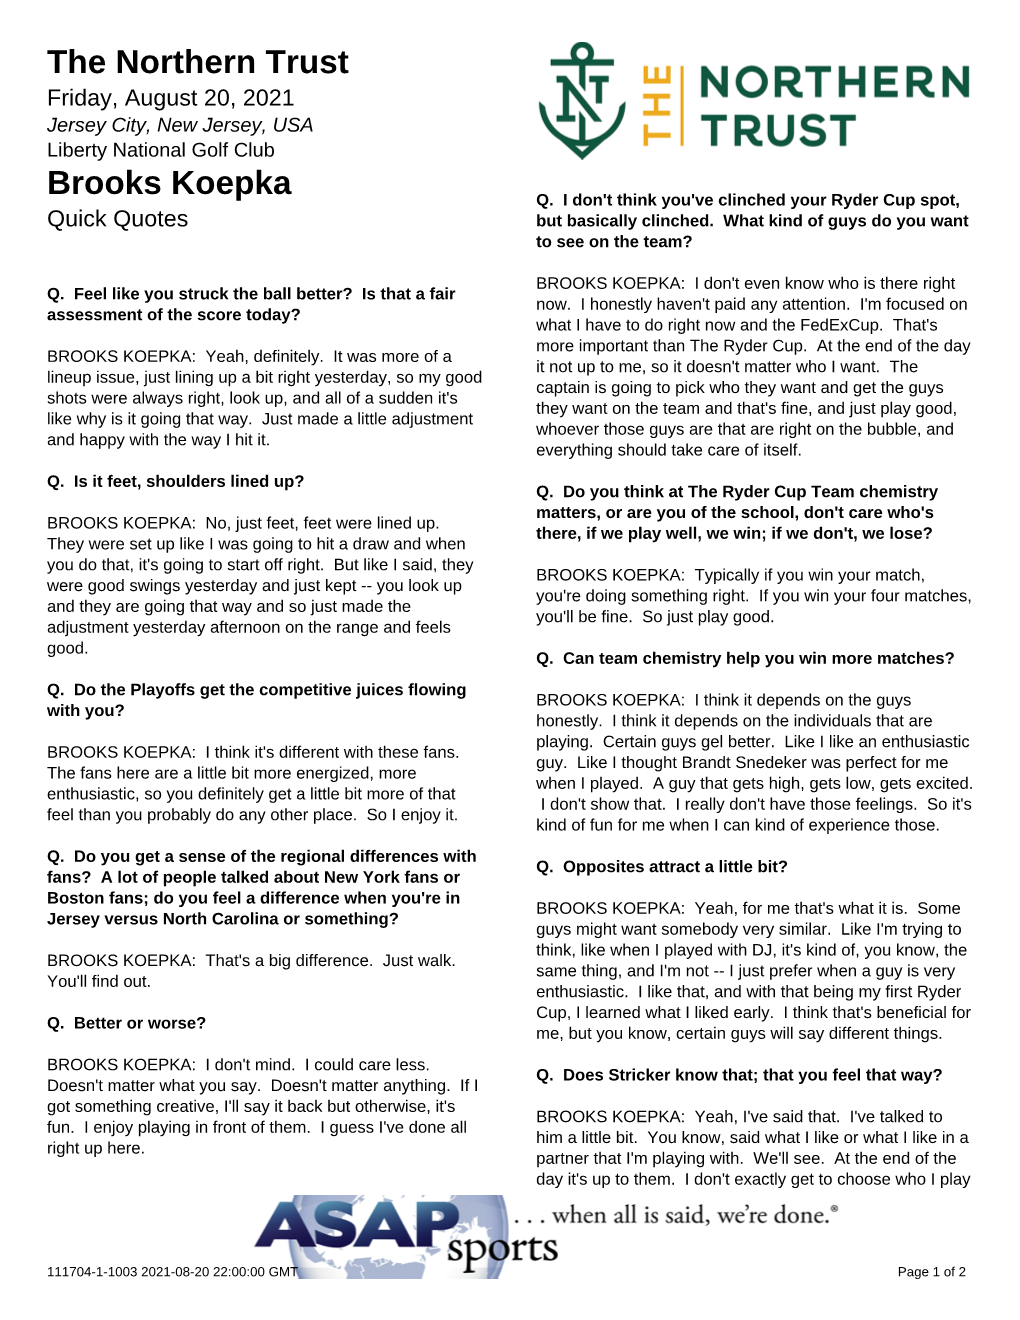 The Northern Trust Brooks Koepka